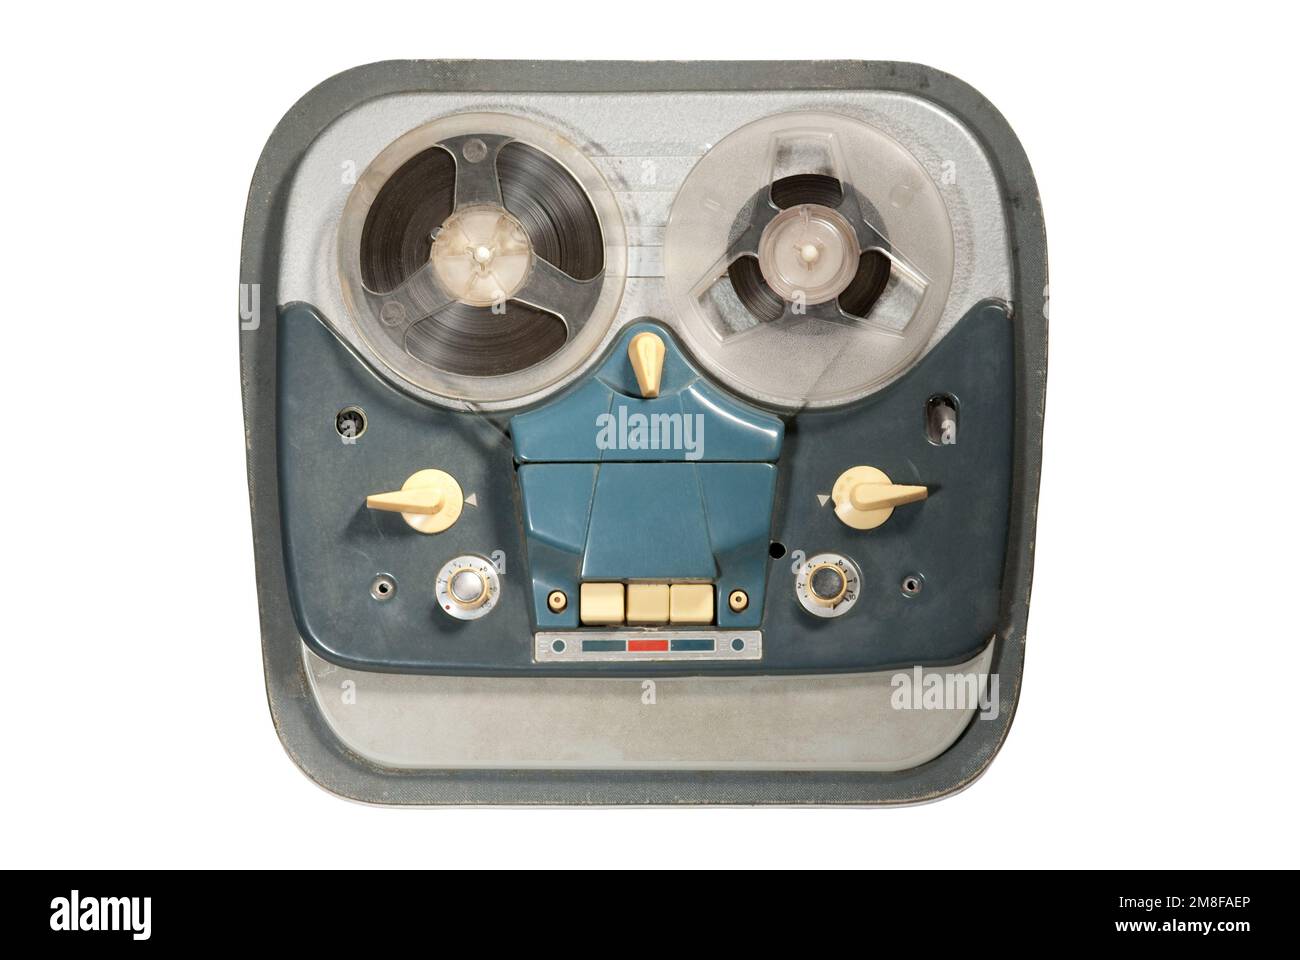 Retro reel-to-reel tape recorder isolated on white Stock Photo